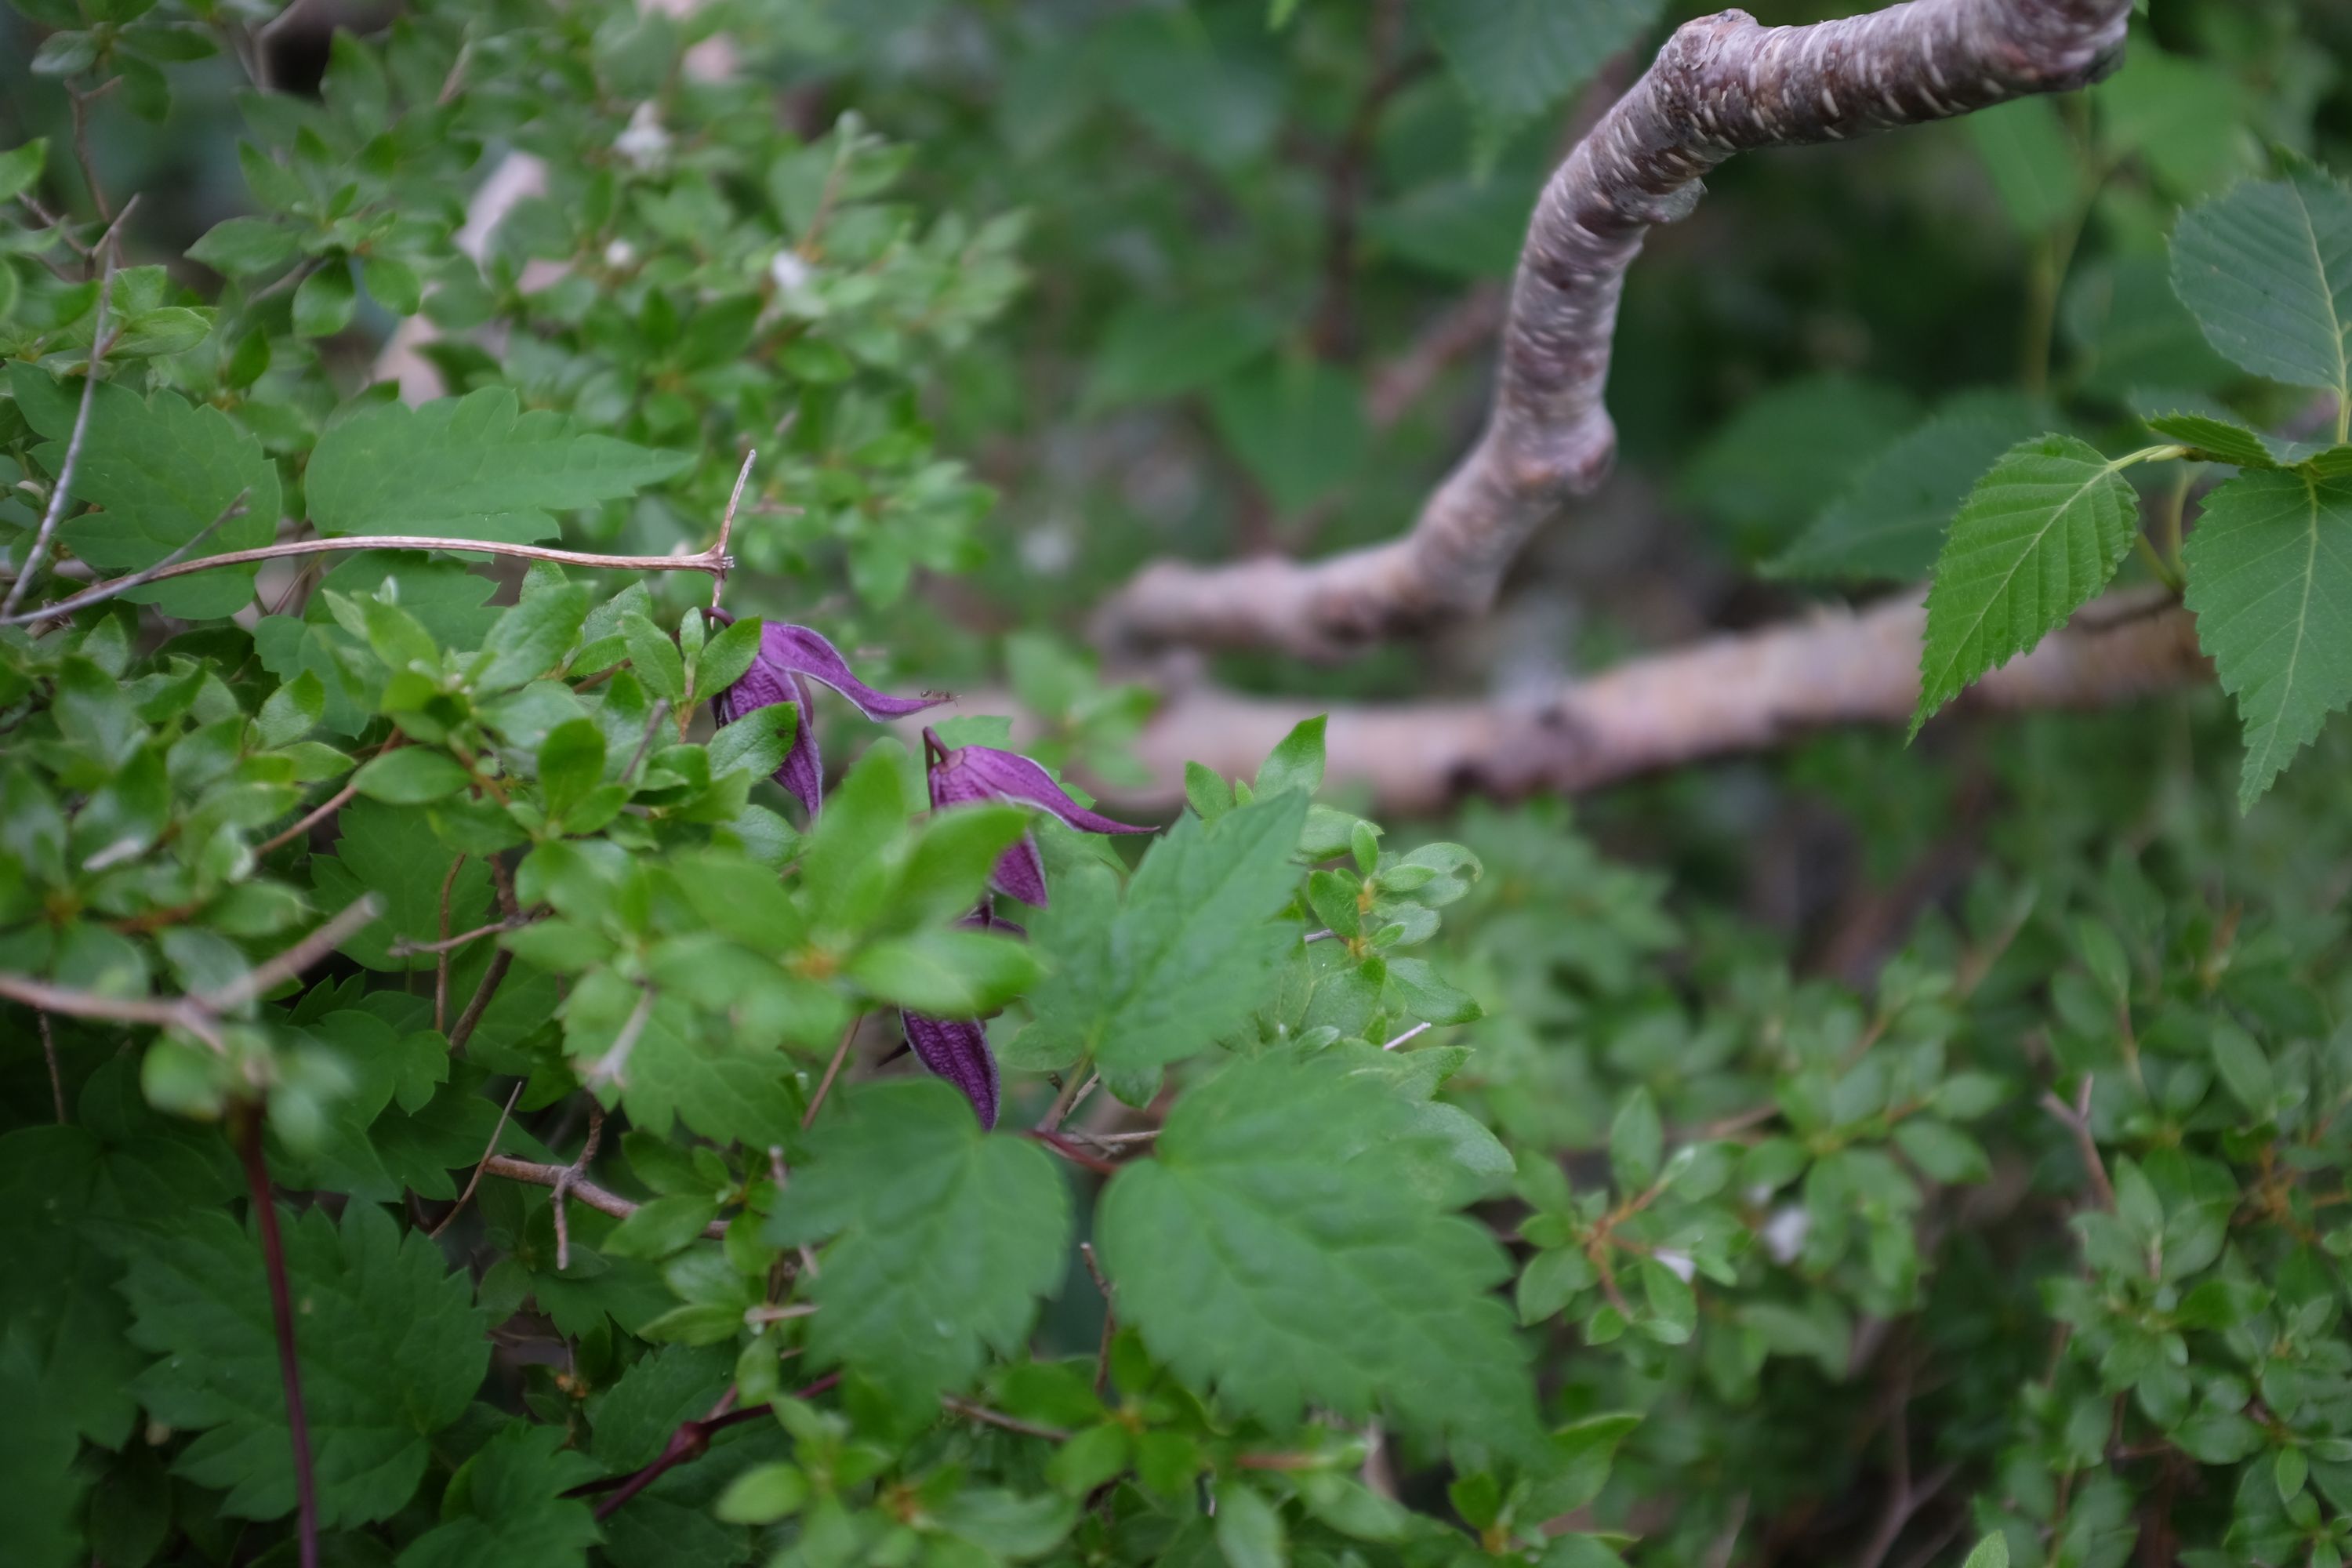 Purple flowers growing in dense, green undergrowth.